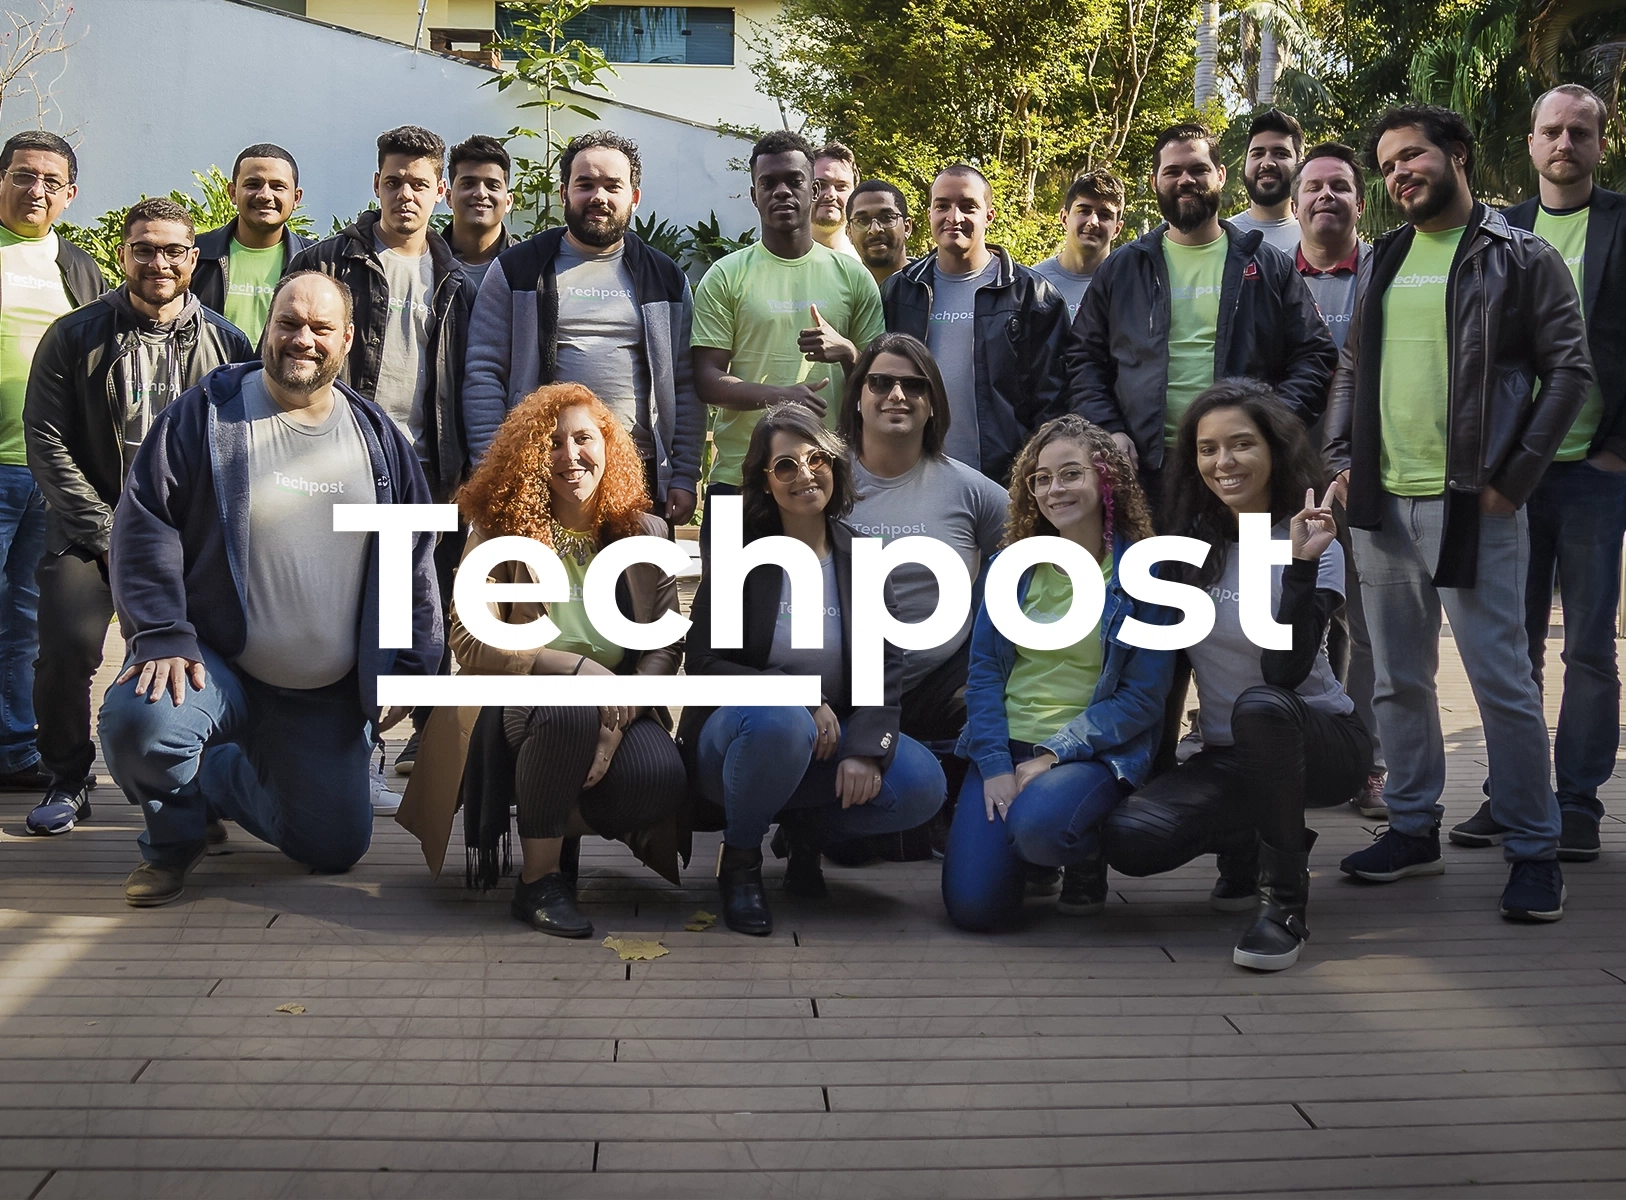 Techpost